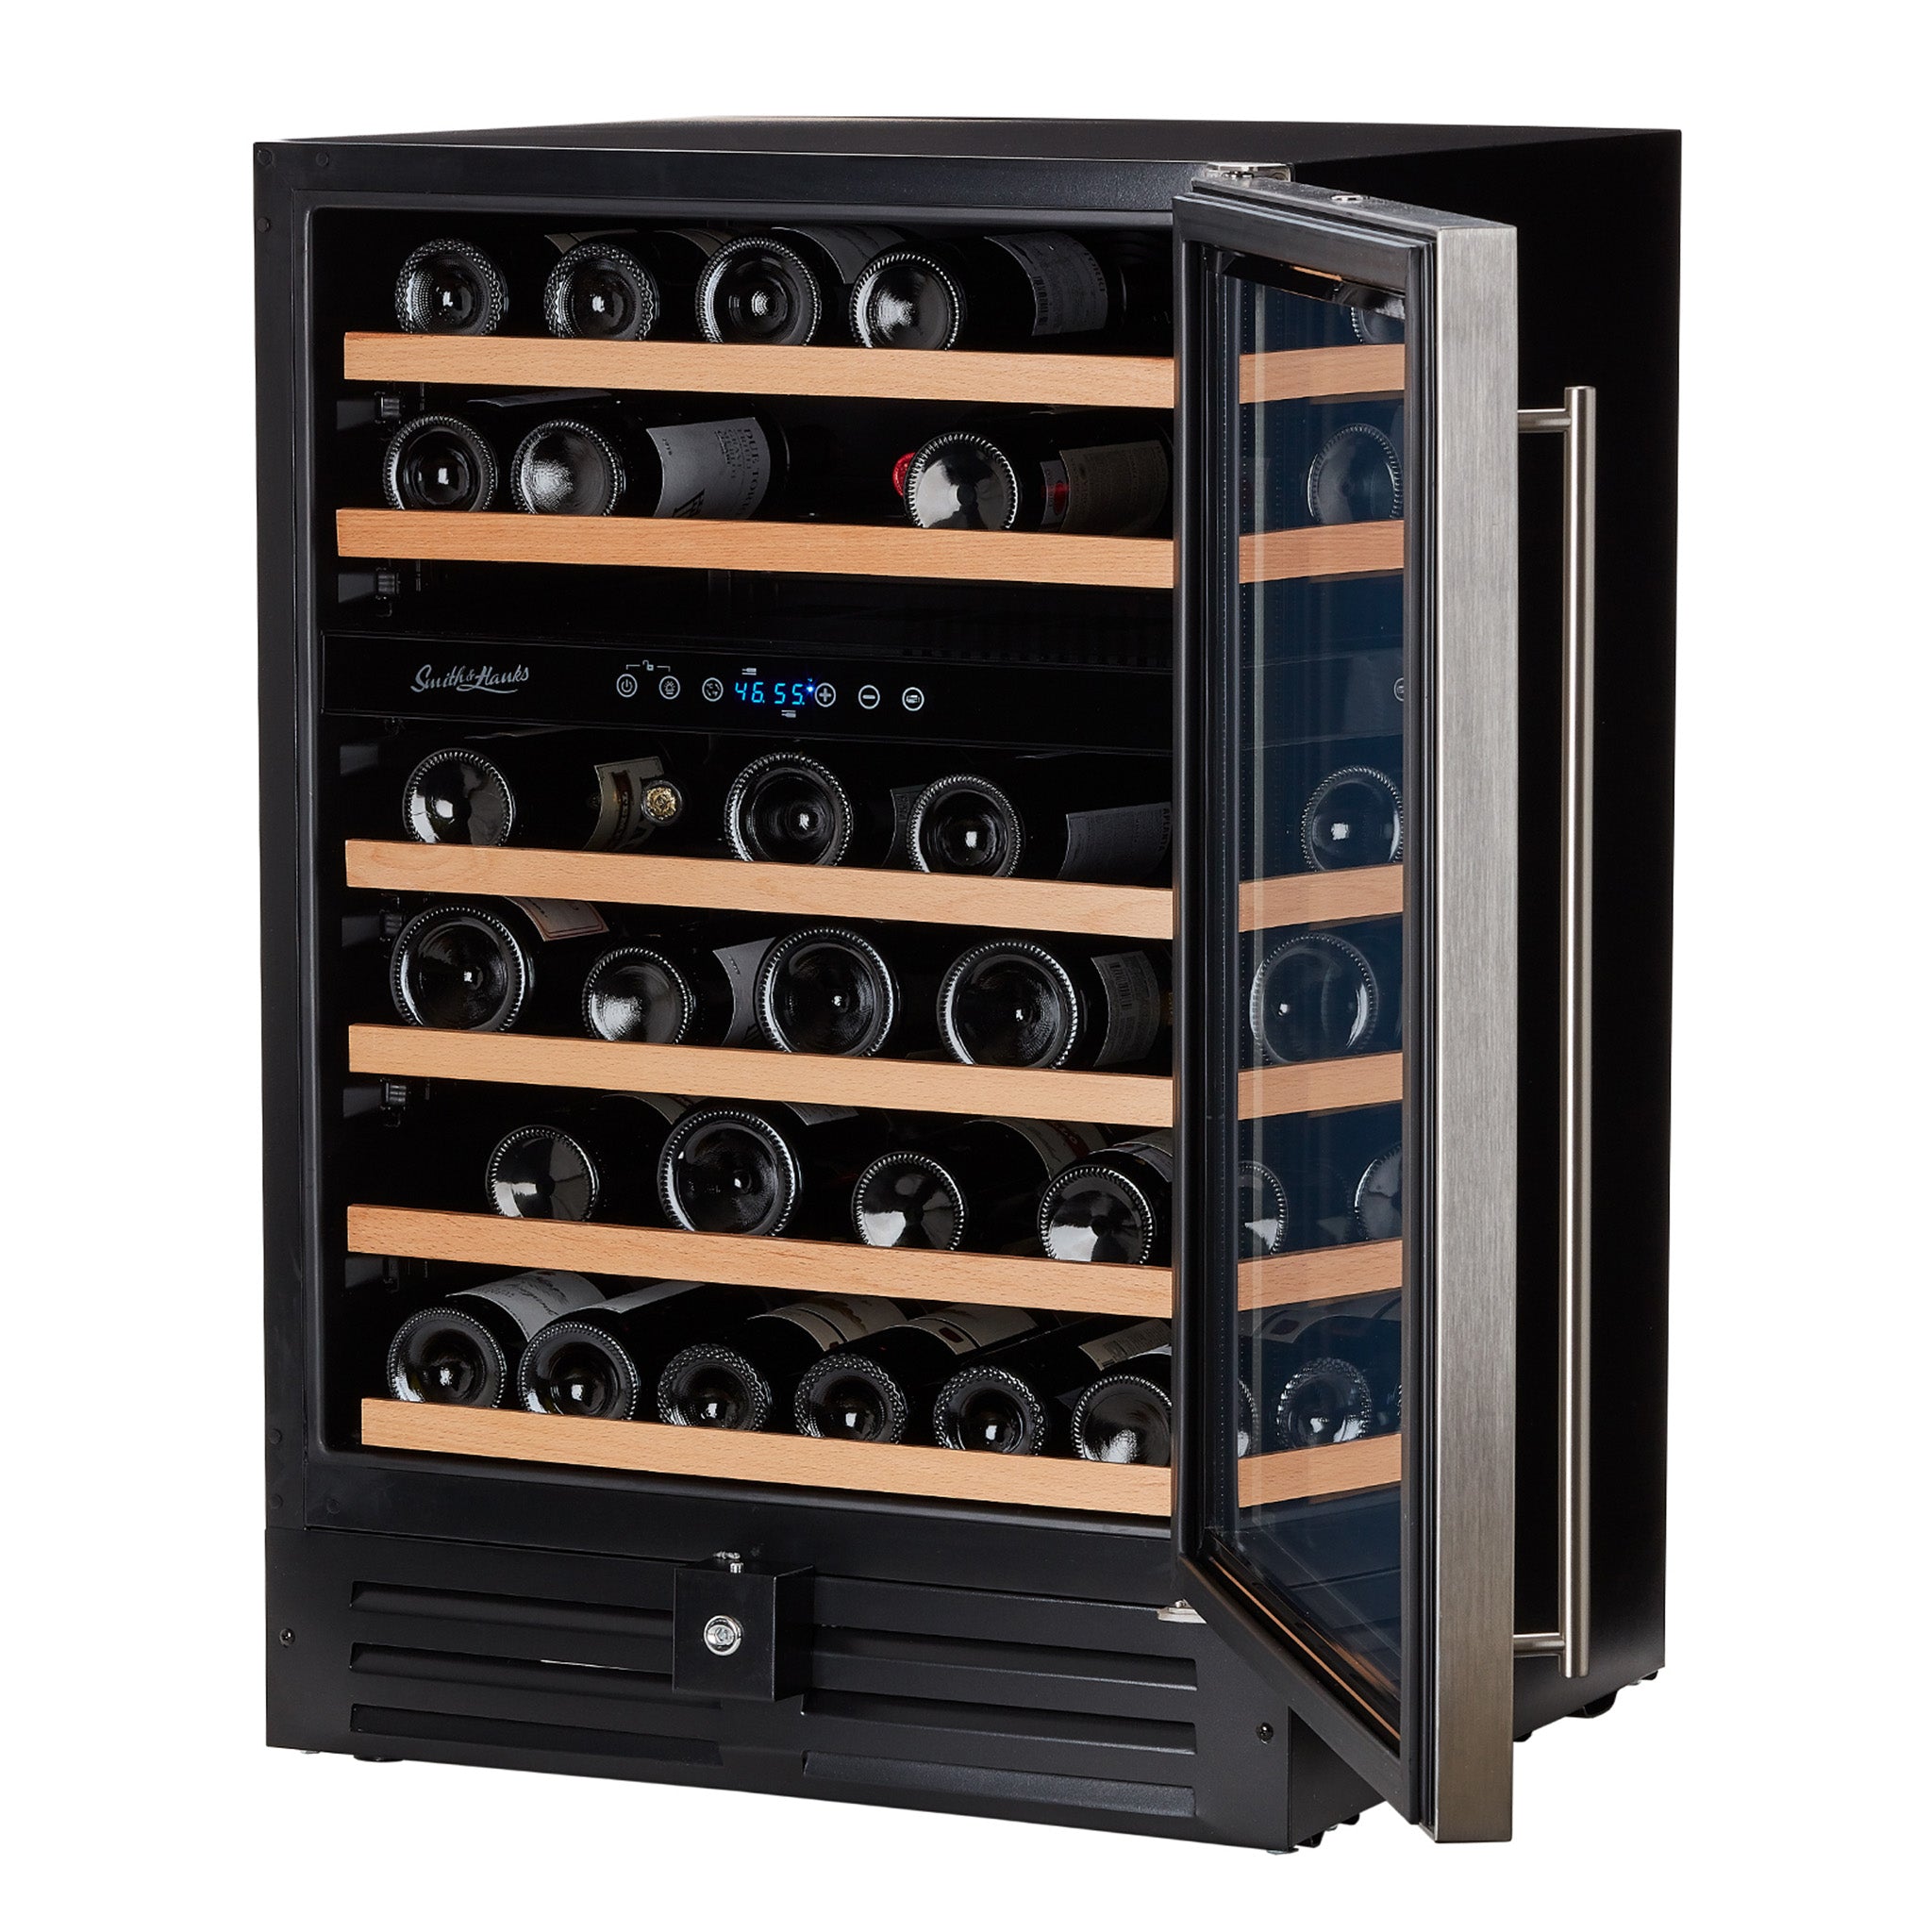 Smith & Hanks - 24" 46 Bottle Premium Dual Zone Under Counter Wine Cooler with Seamless Stainless Steel Trim Door (RE100009)